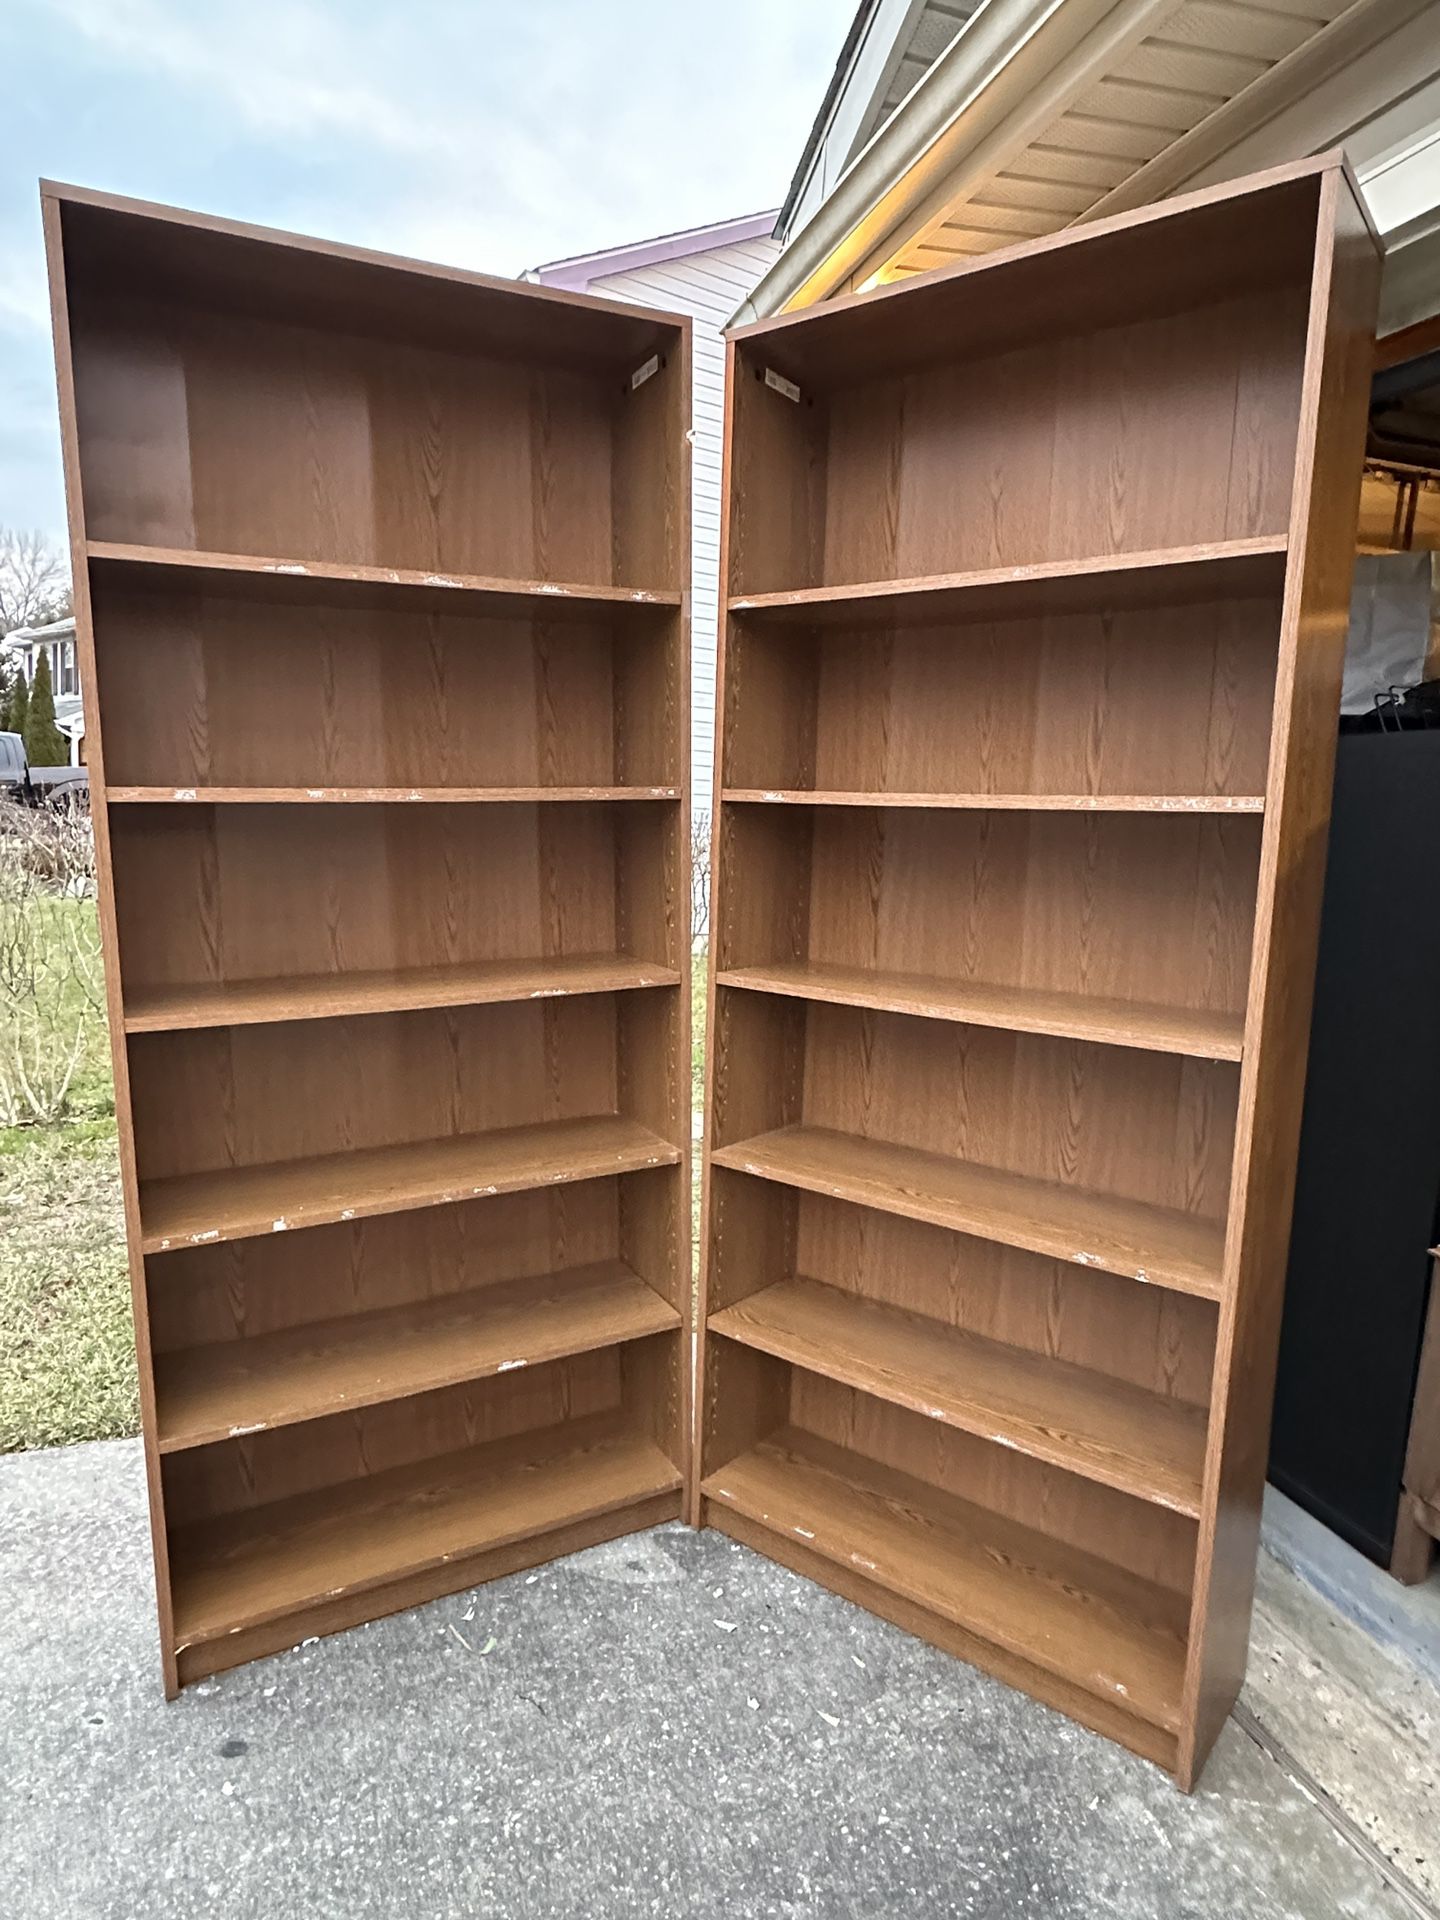 2 wooden brown bookshelves excellent condition 5 shelves adjustable